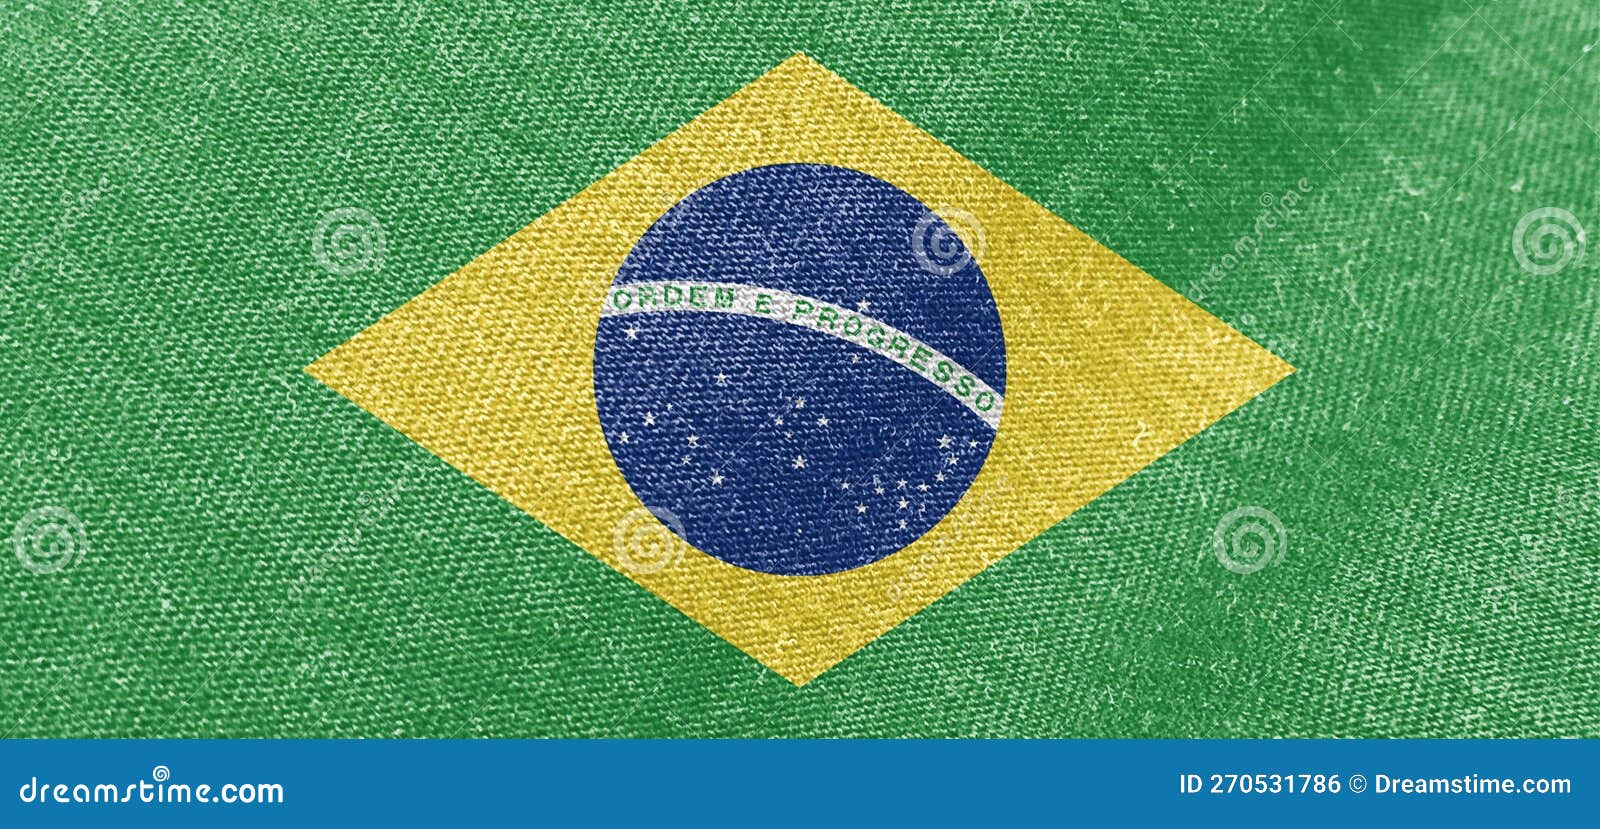 Brazil Flag Wallpapers  Top 30 Best Brazil Flag Wallpapers Download